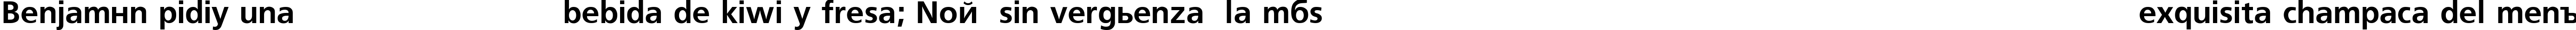 Пример написания шрифтом FreeSet-Bold текста на испанском